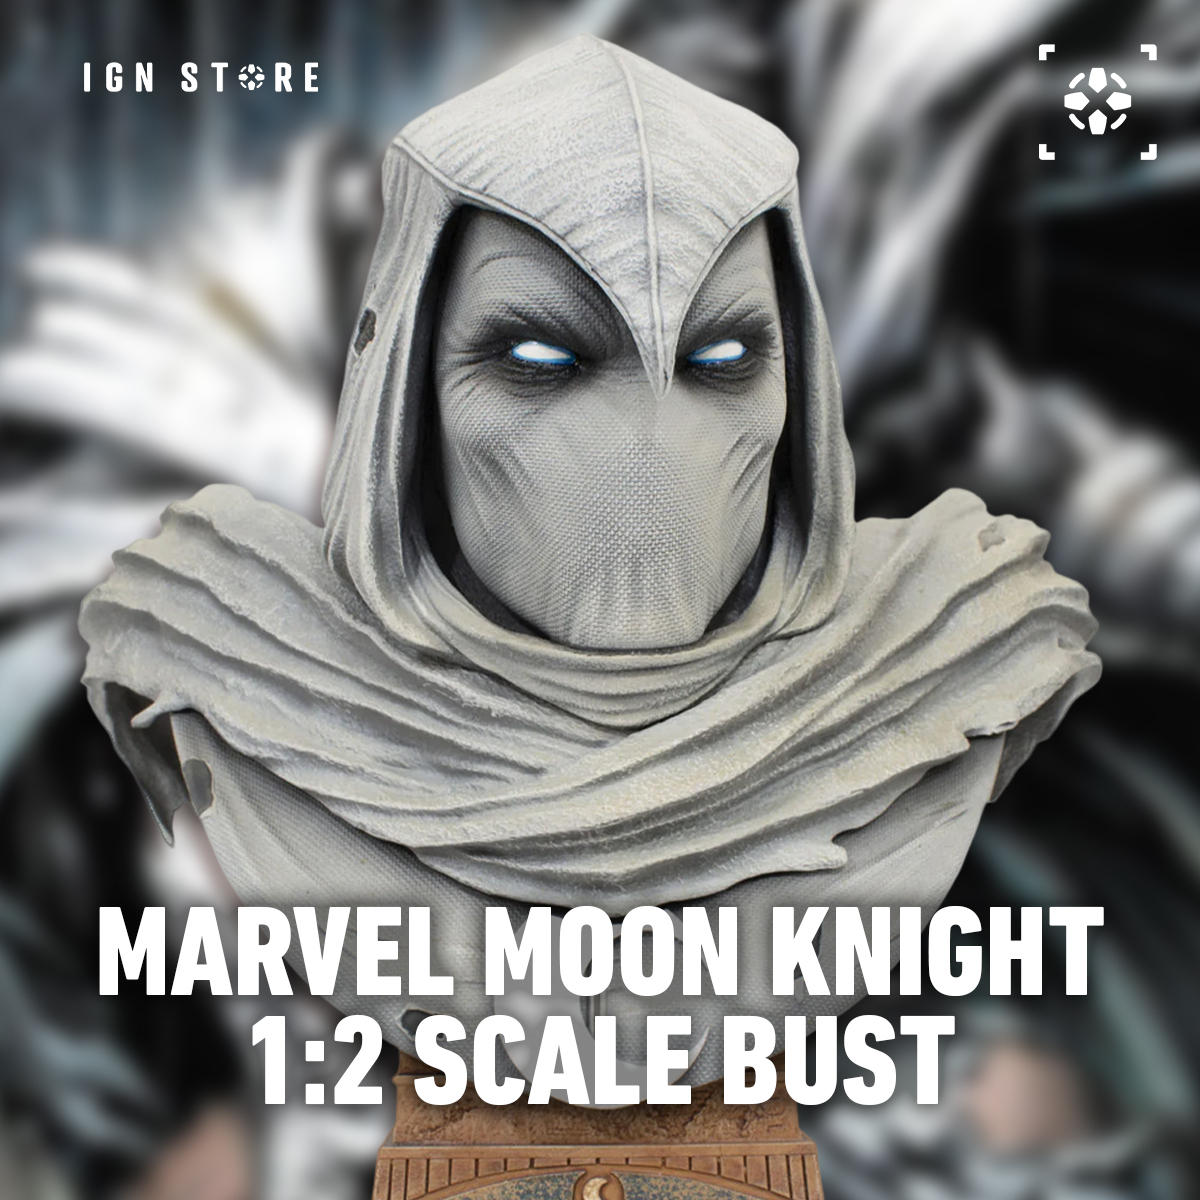 Moon Knight - IGN